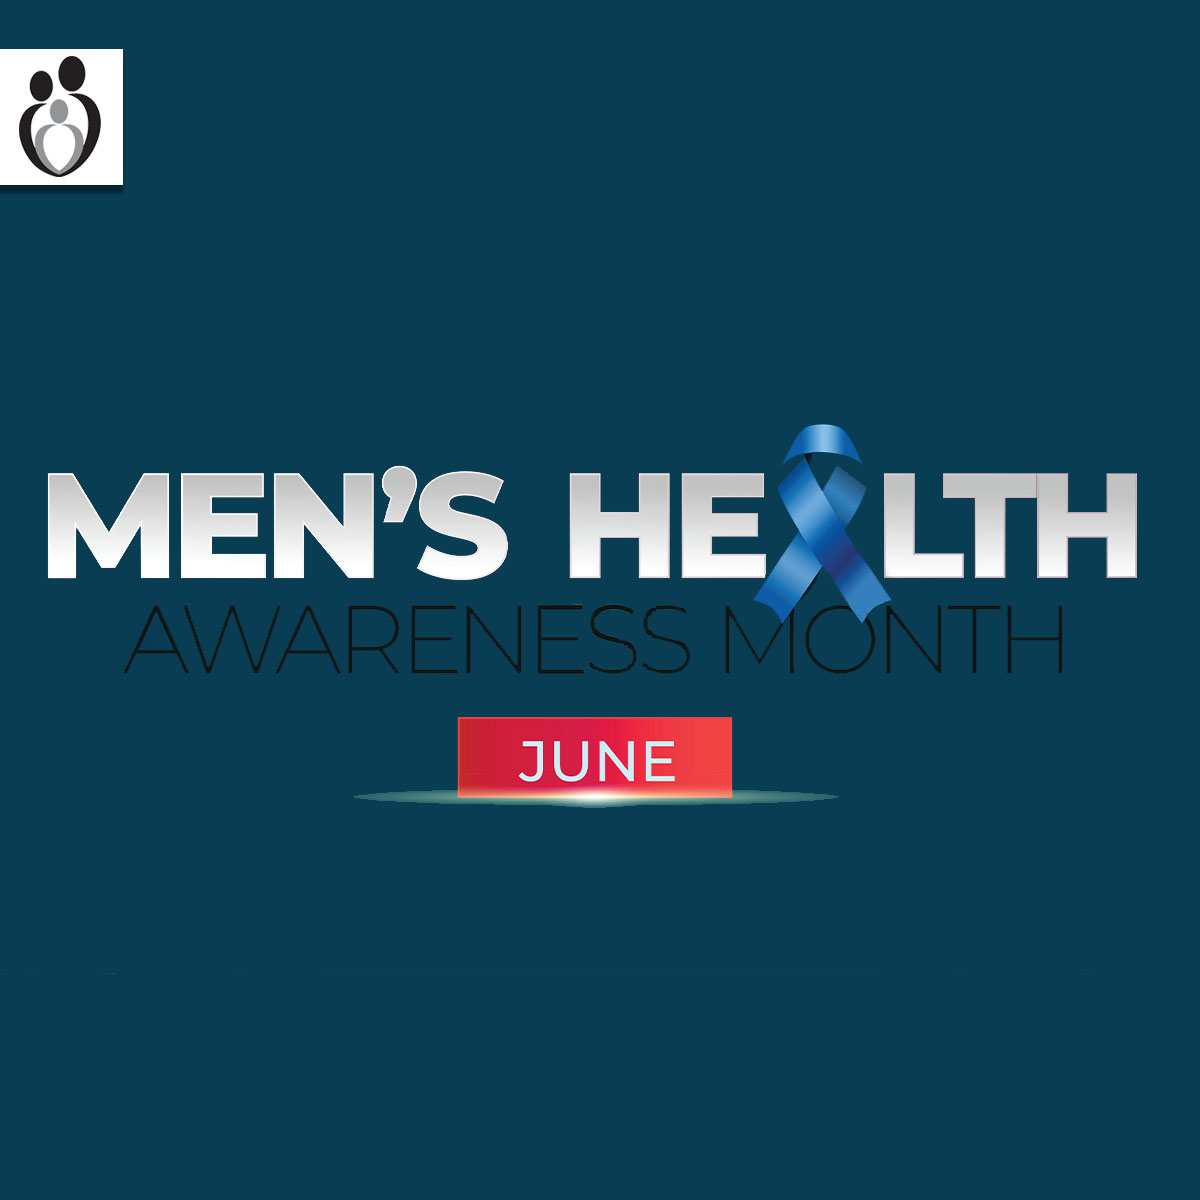 Men's health Month | Promise Community Health Center in Sioux Center, Iowa | Federally Qualified Health Center serving Rock Valley, Hull, Boyden, Sheldon, LeMars, Rock Rapids, Hawarden, Orange City, Alton, Granville, Hospers, Ireton Iowa